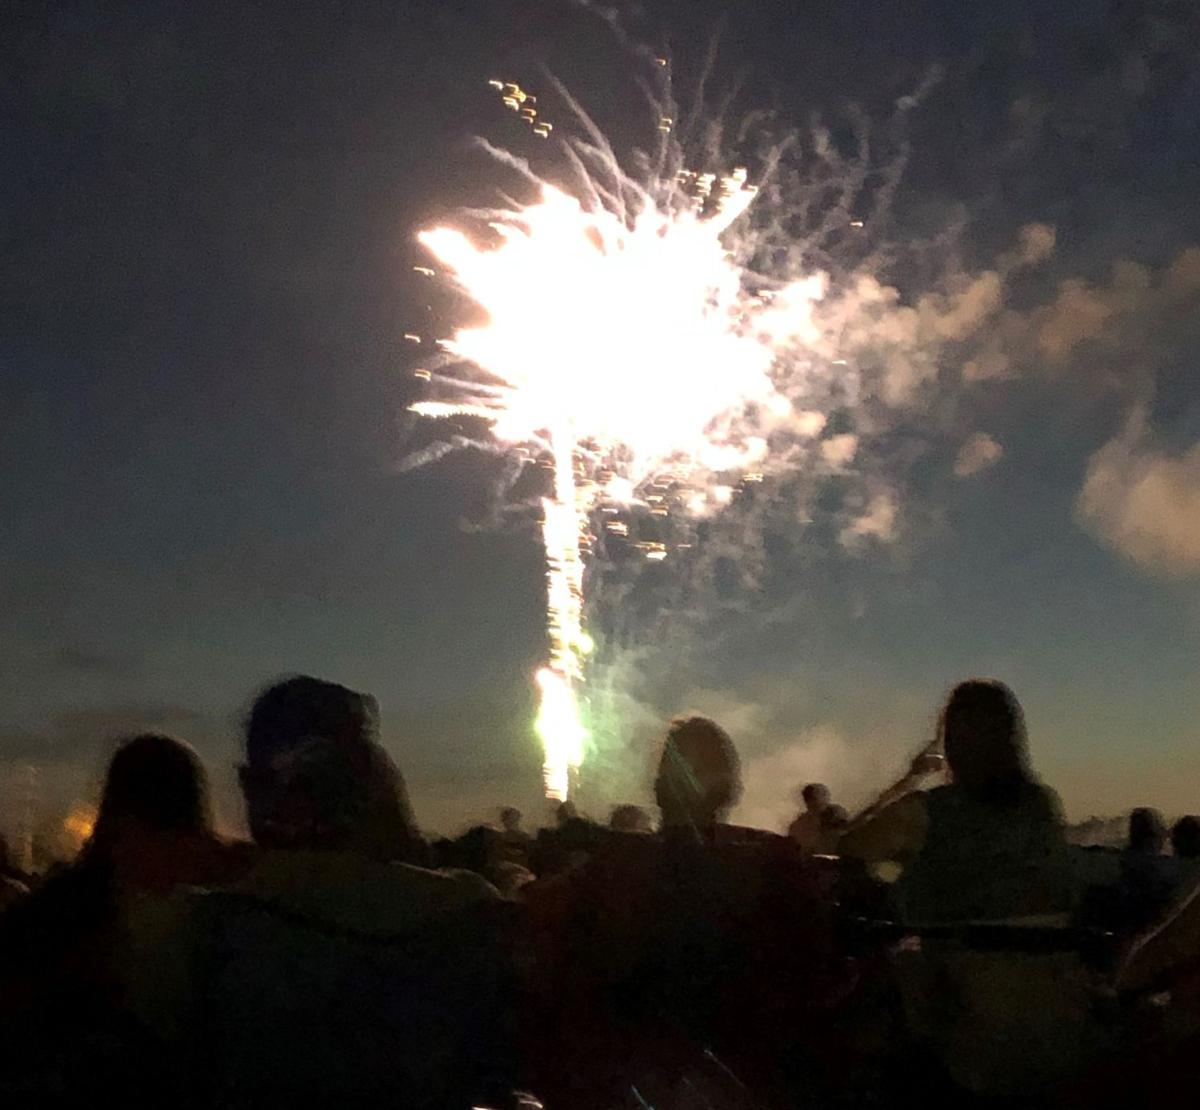 Covid19 blows up Tonawanda's July 3 fireworks plans